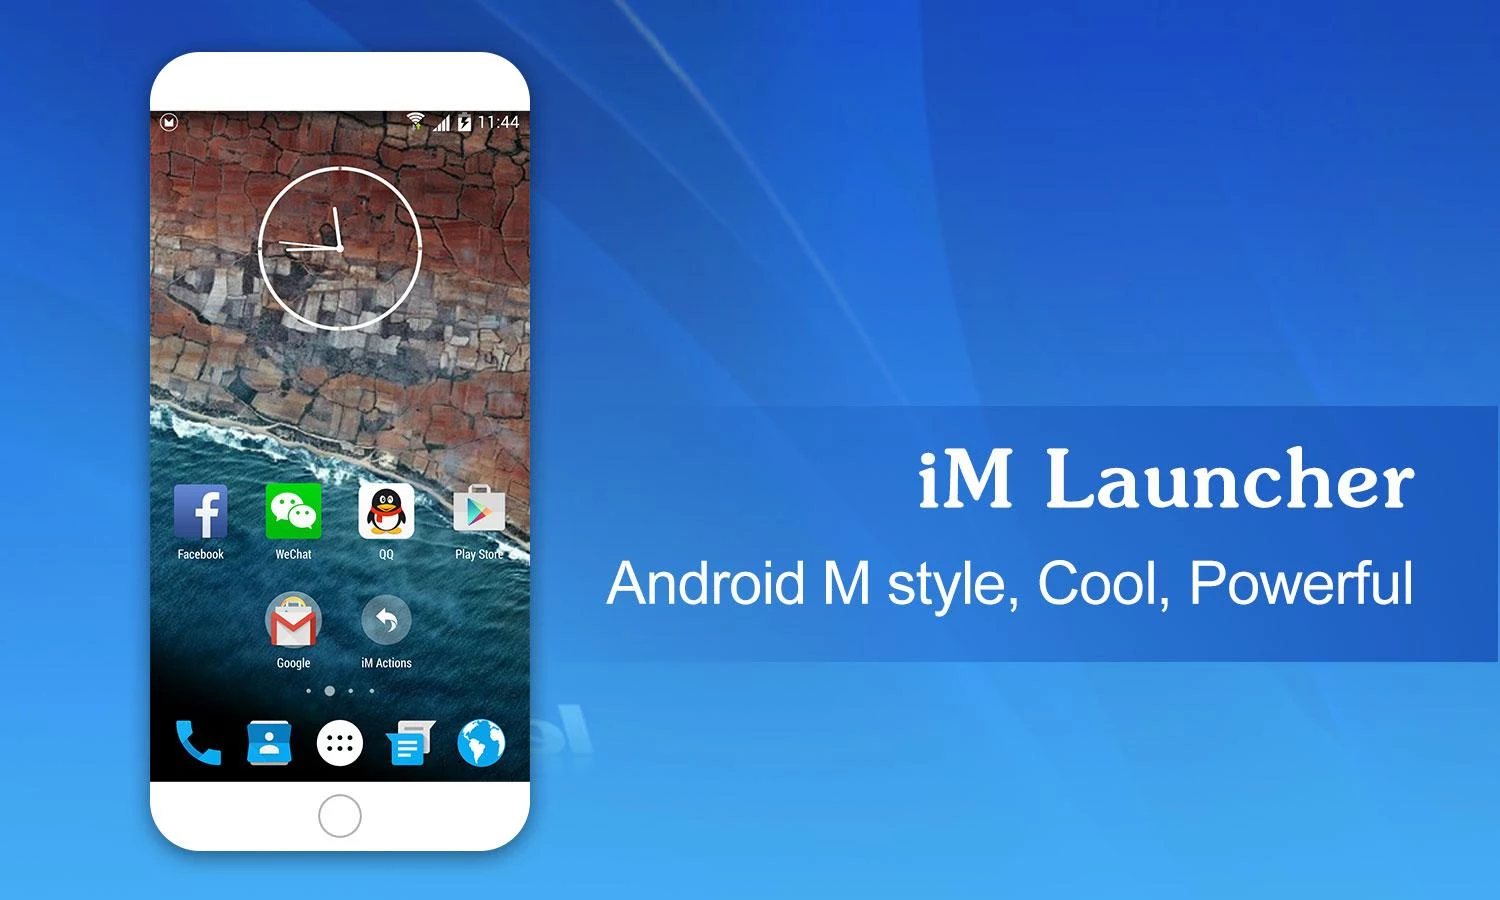 Android 4 Launcher. M Launcher APK. Андроид стиль. Хиос лаунчер приложение. Лаунчер для андроид что это